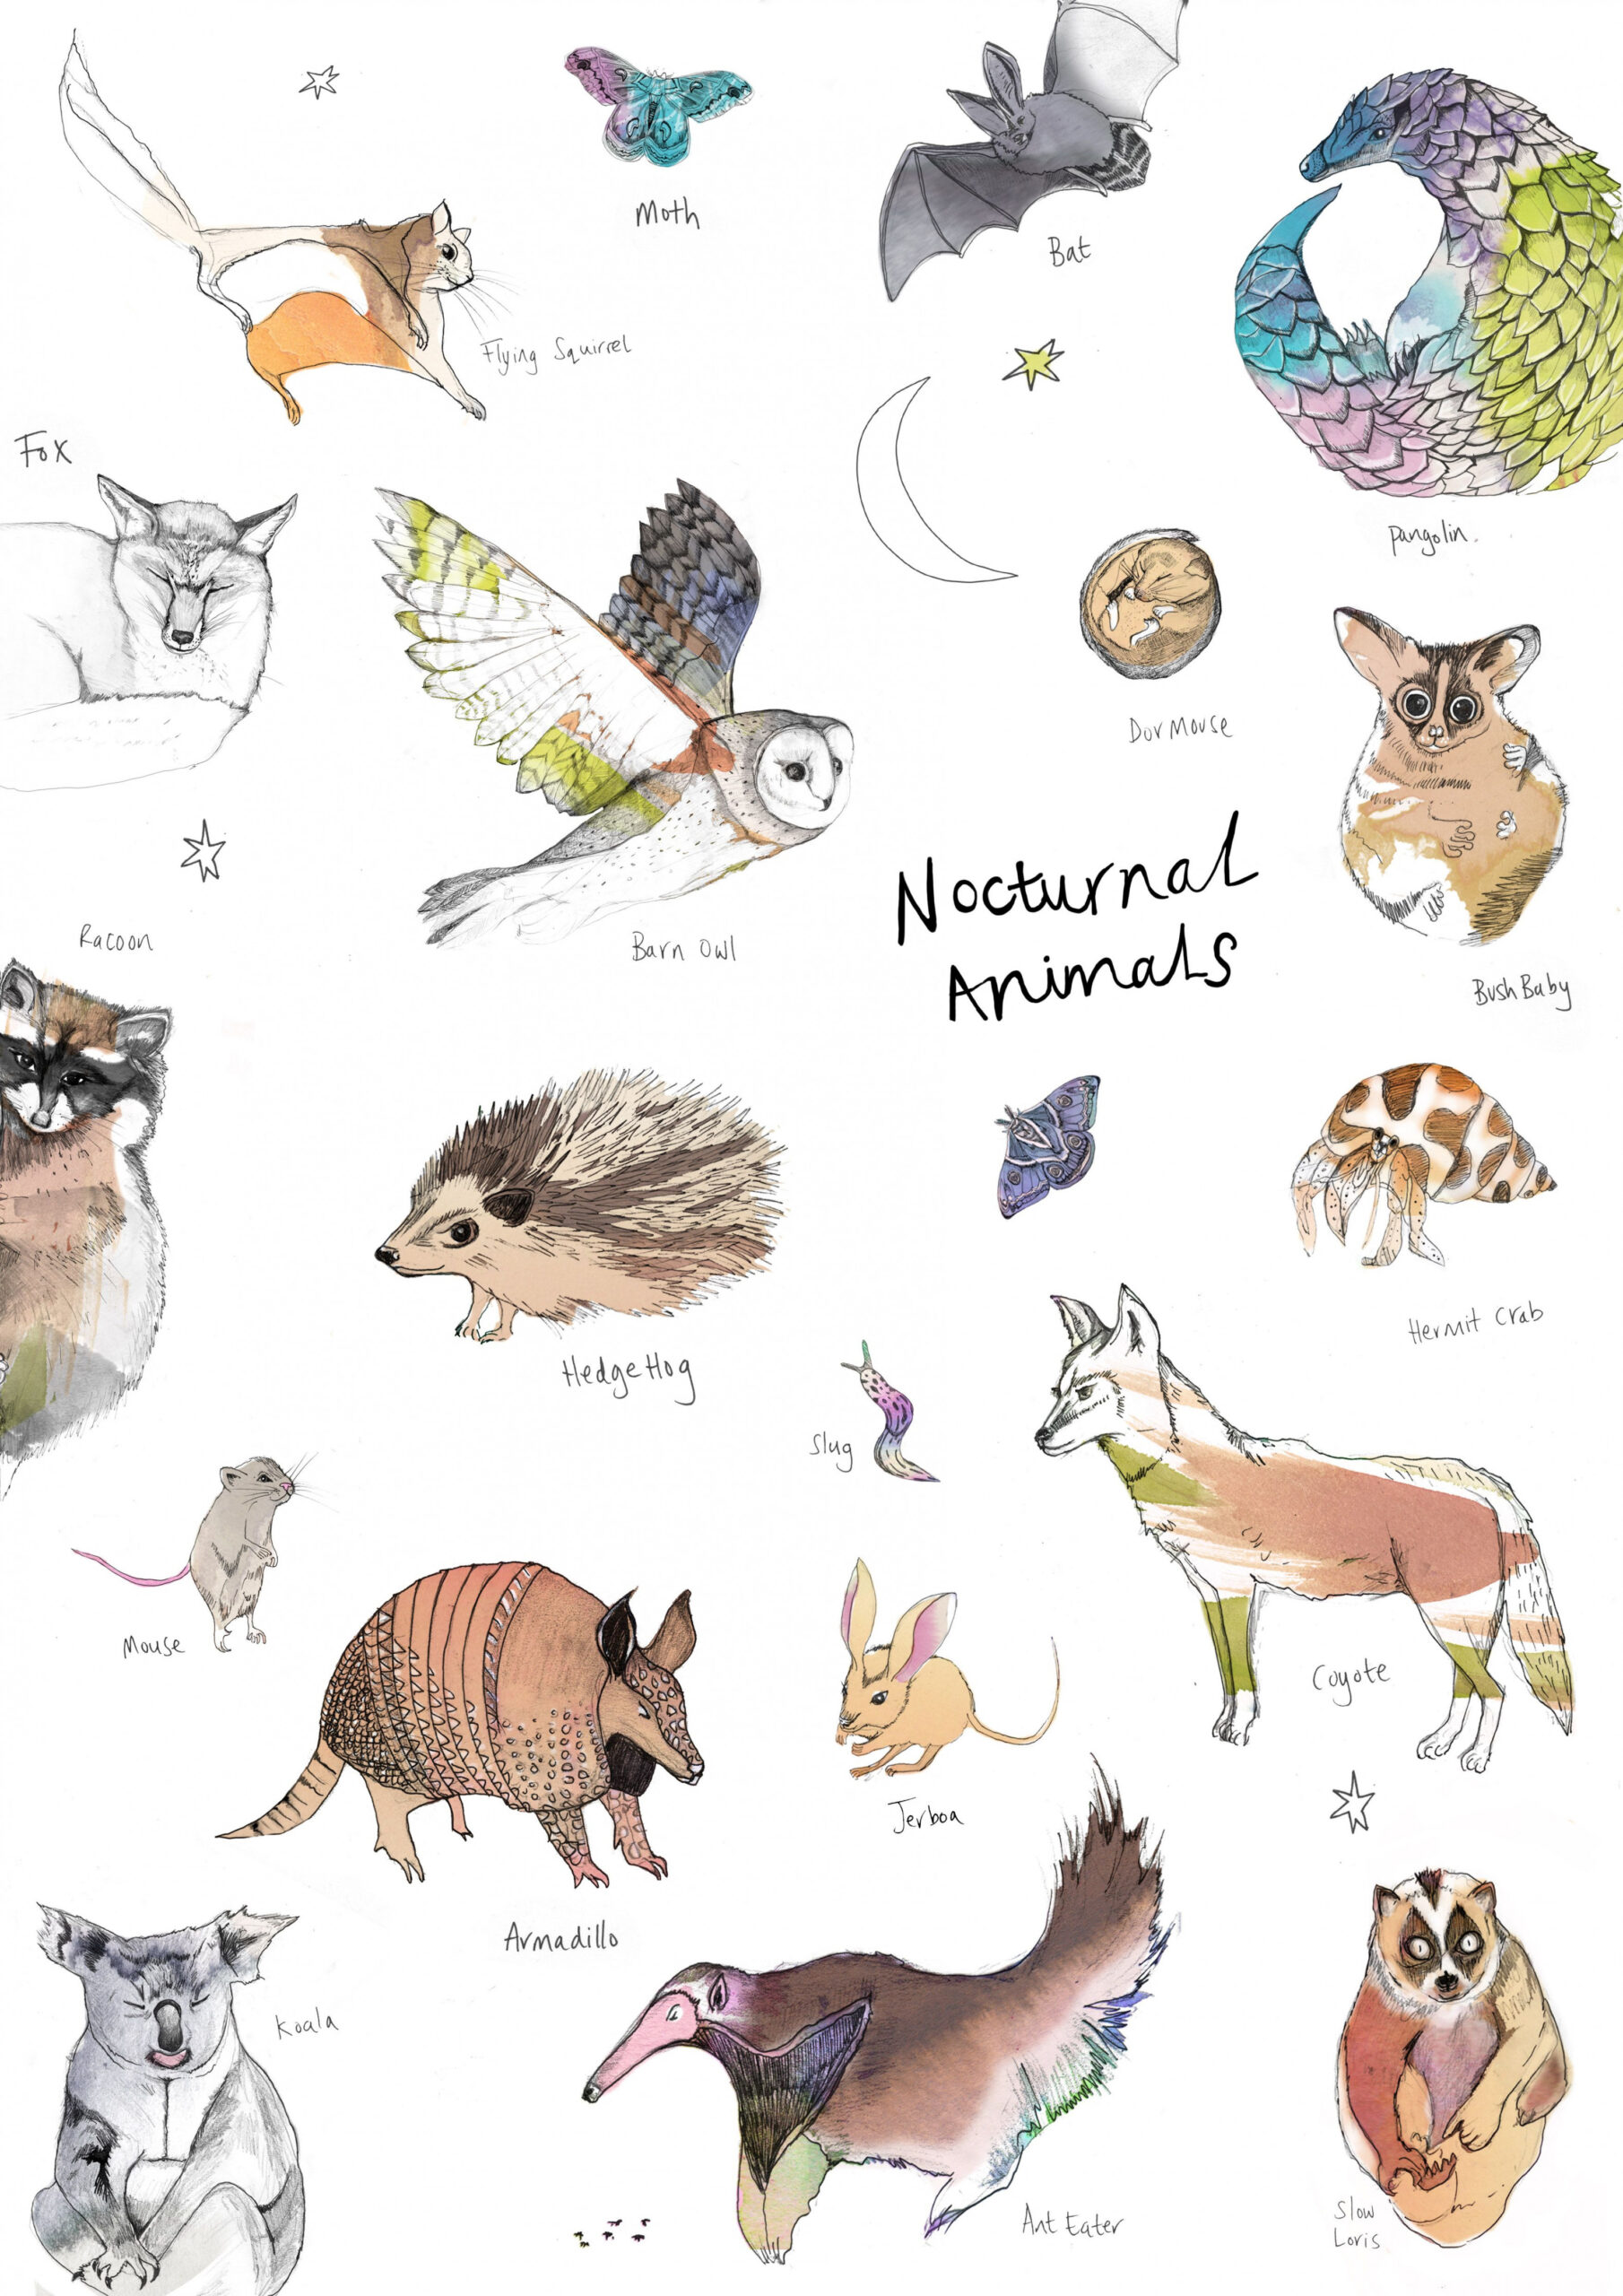 Nocturnal Animal Art Print By Nina Nou  Nocturnal animals, Animal